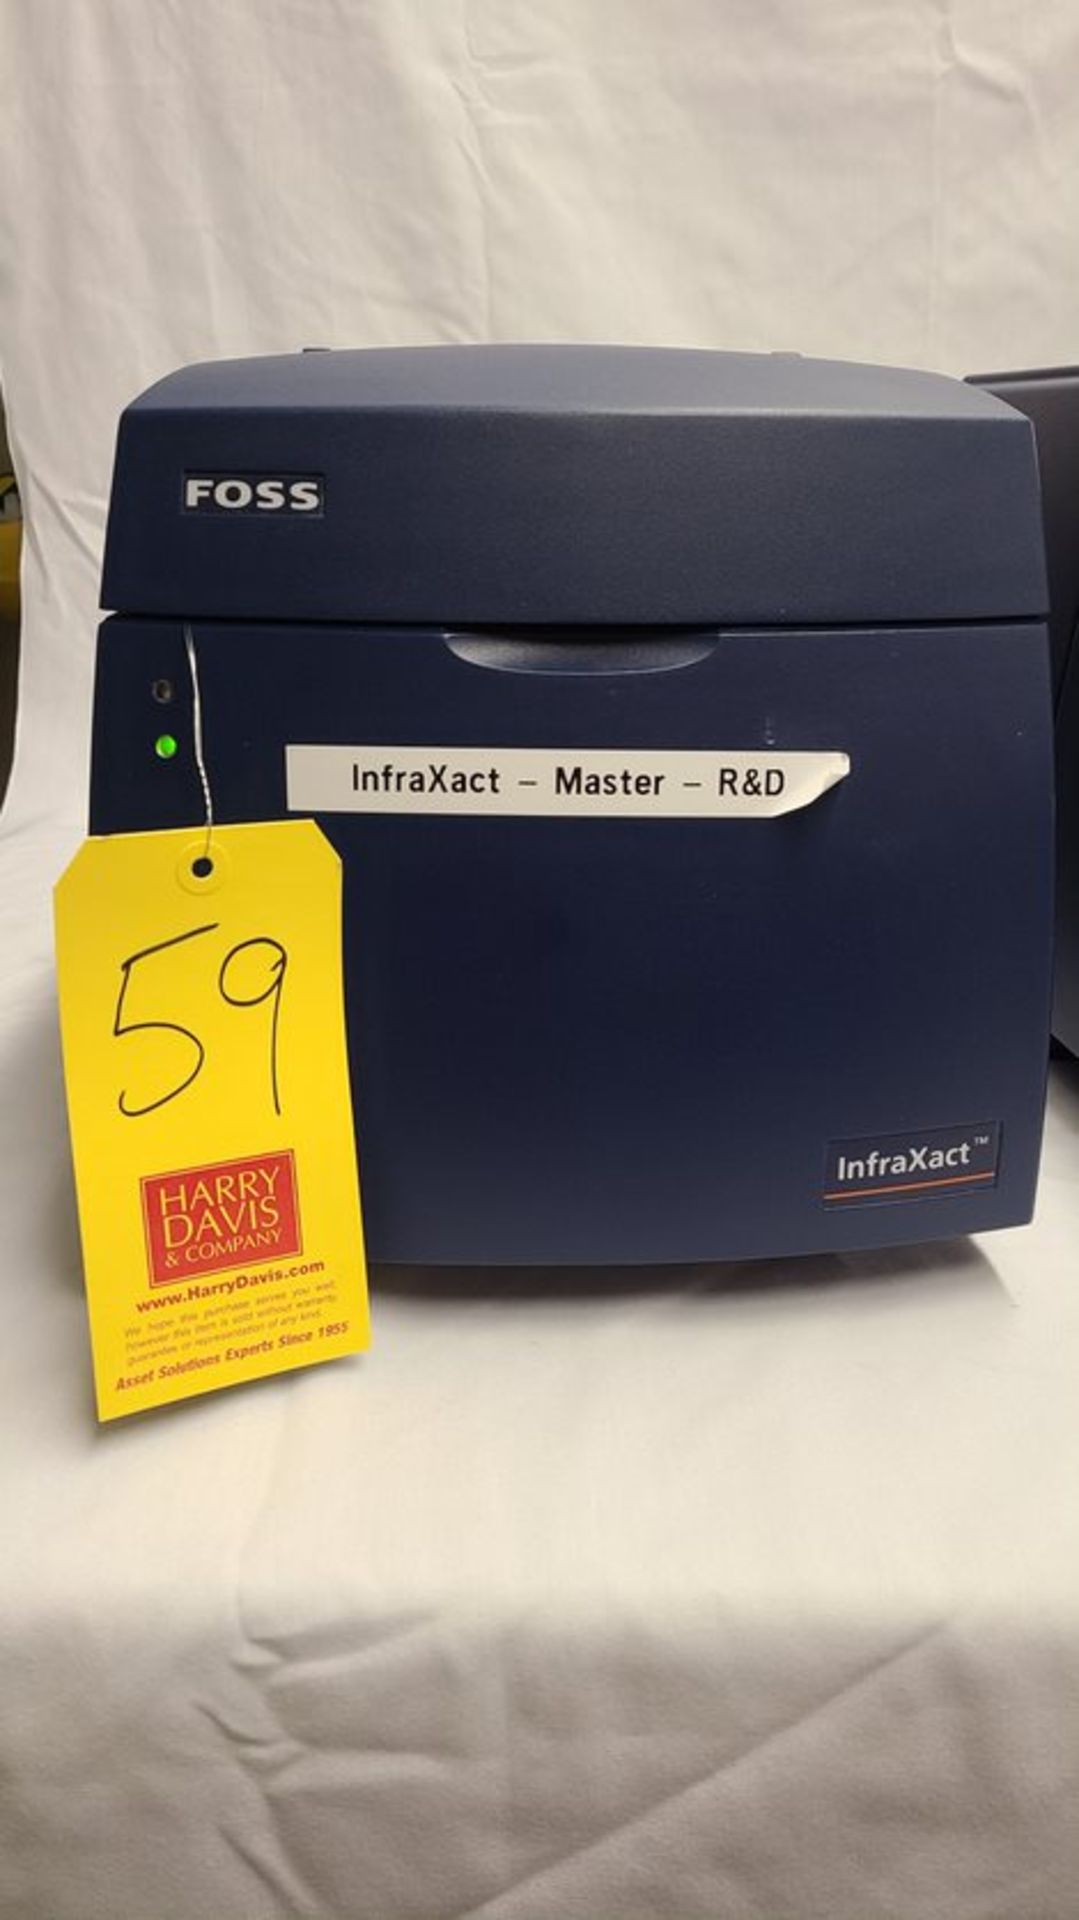 Foss InfraXact - Rigging fee: $50